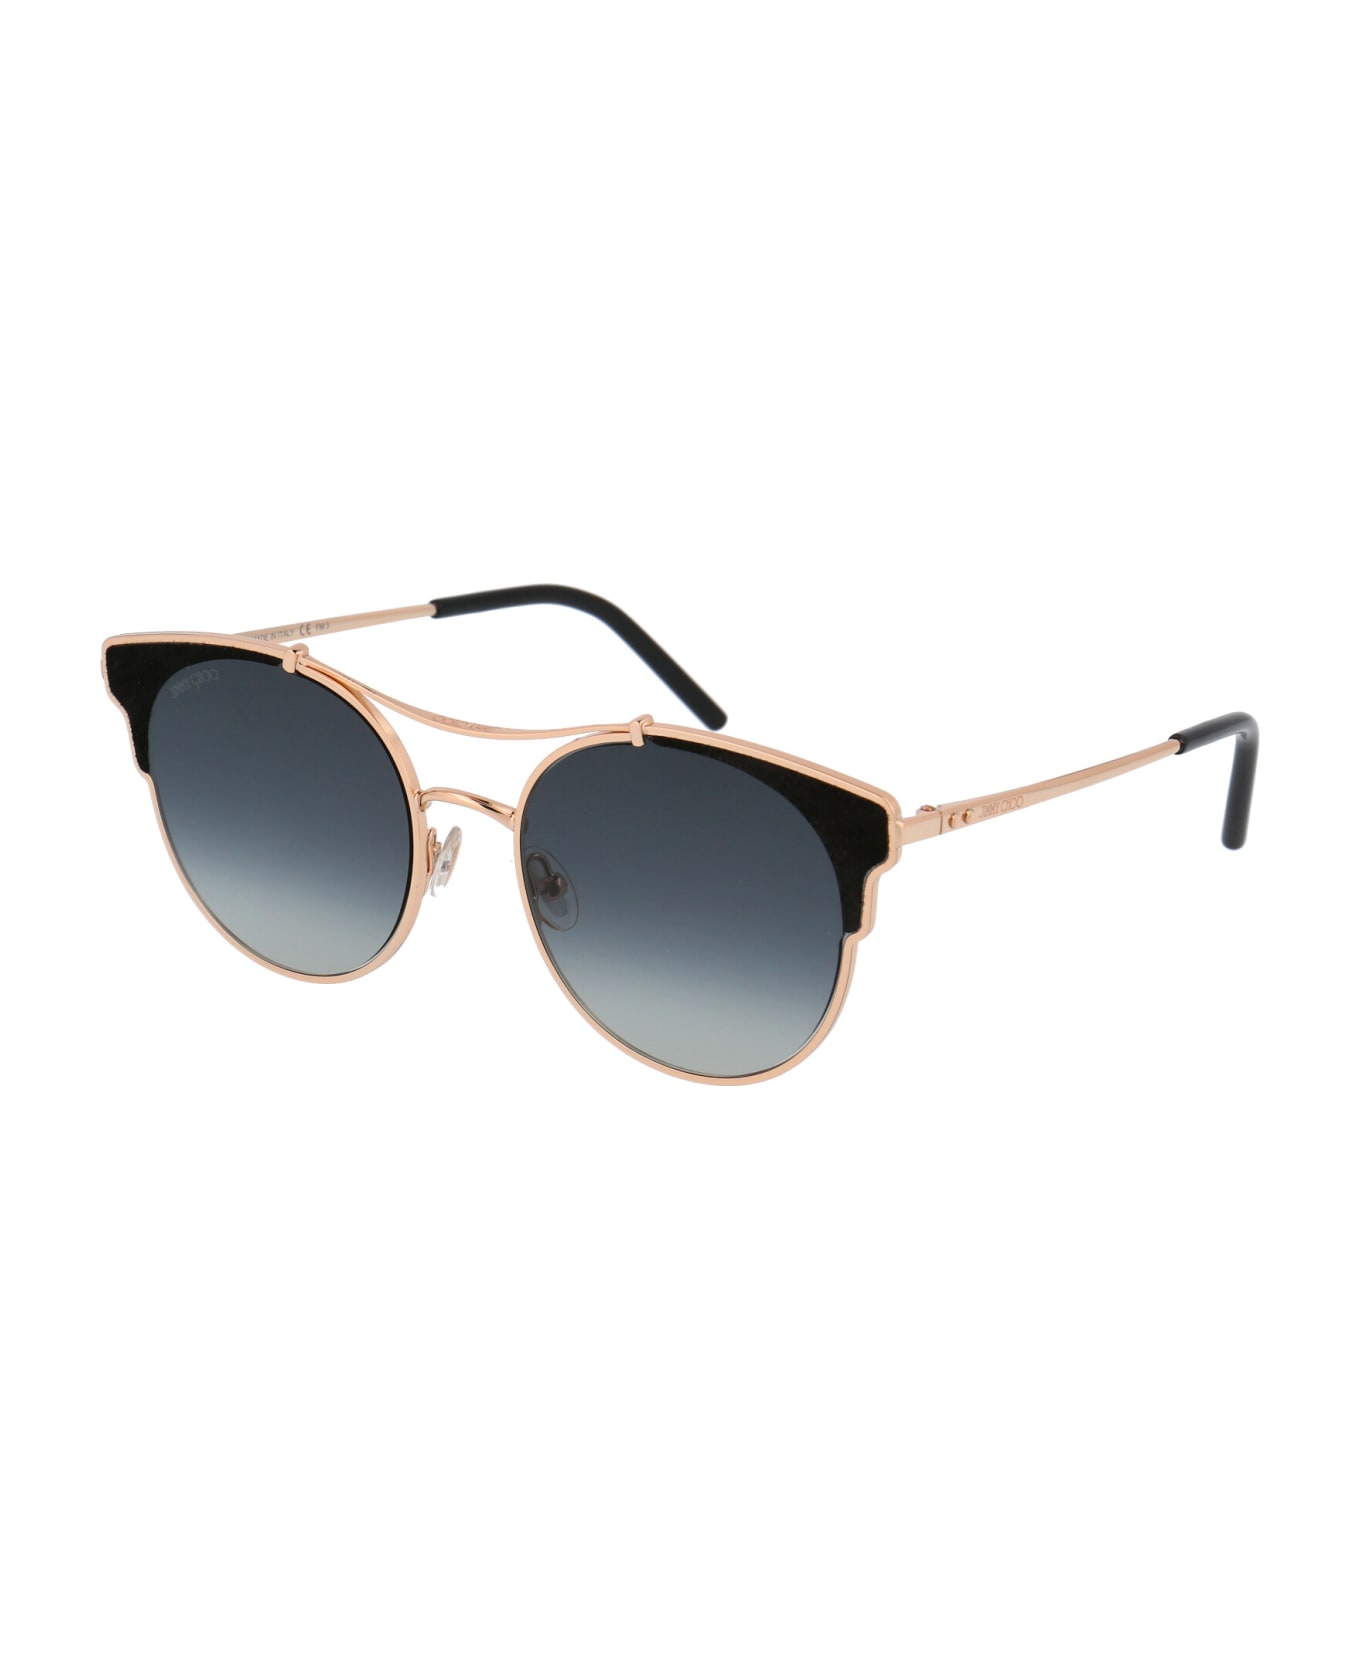 Sunglasses TURBINE OO9263 926314 Lue/s Sunglasses - Copenhagen D-frame sunglasses Marrone